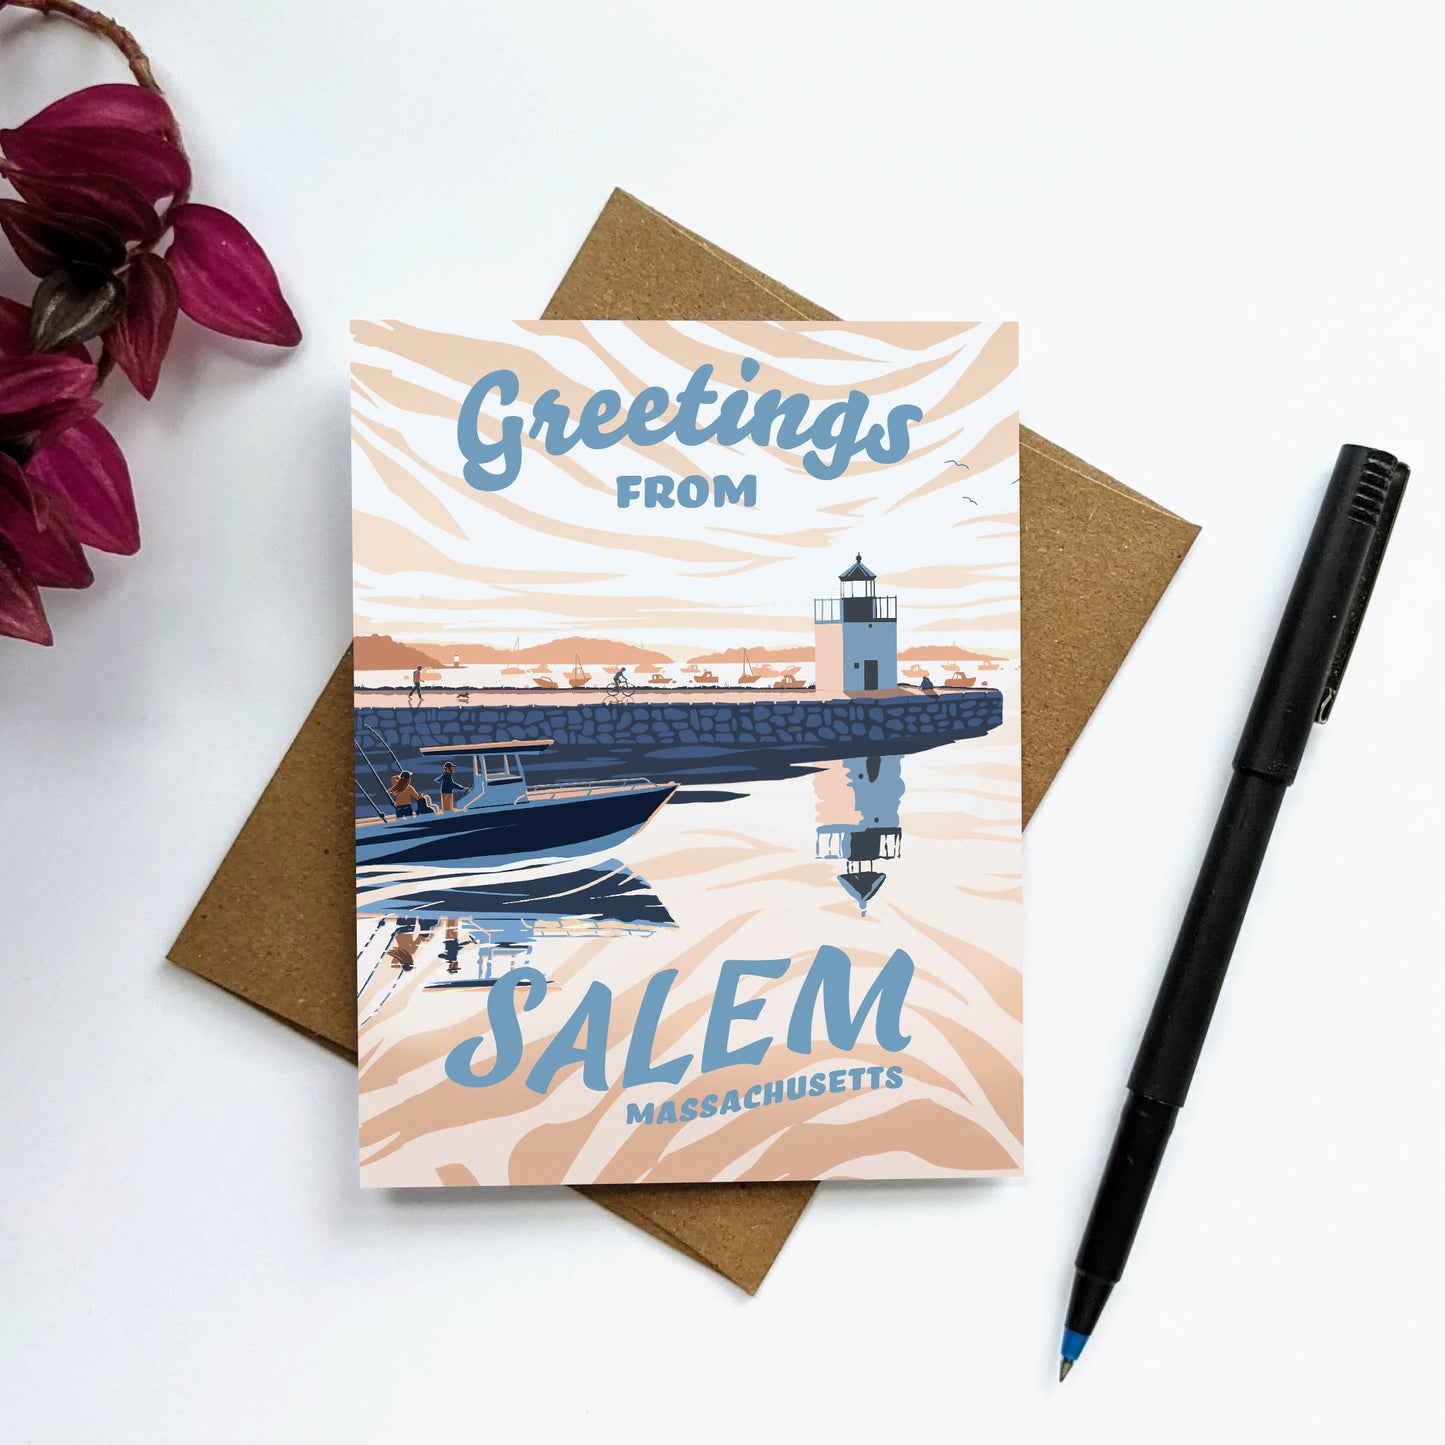 "Greetings from Salem, Massachusetts" Greeting Card